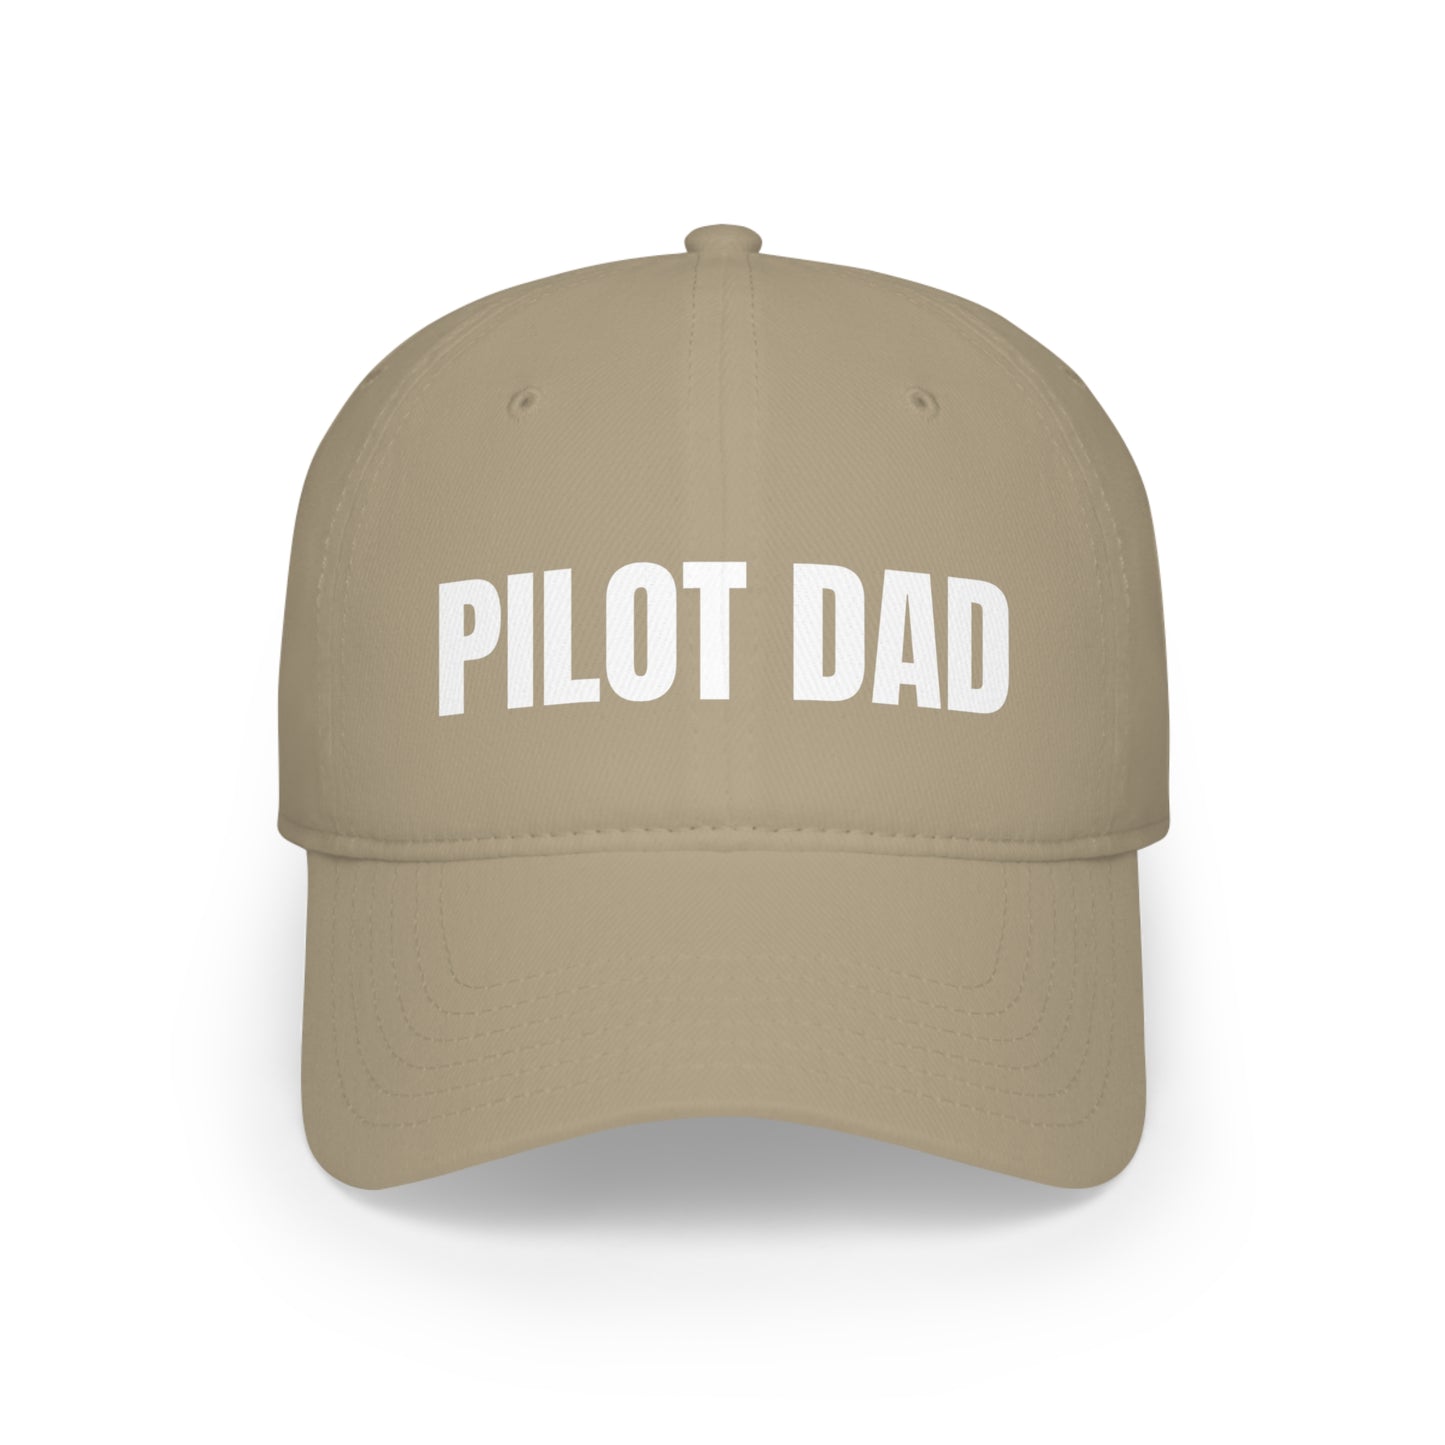 "Pilot Dad" Hat